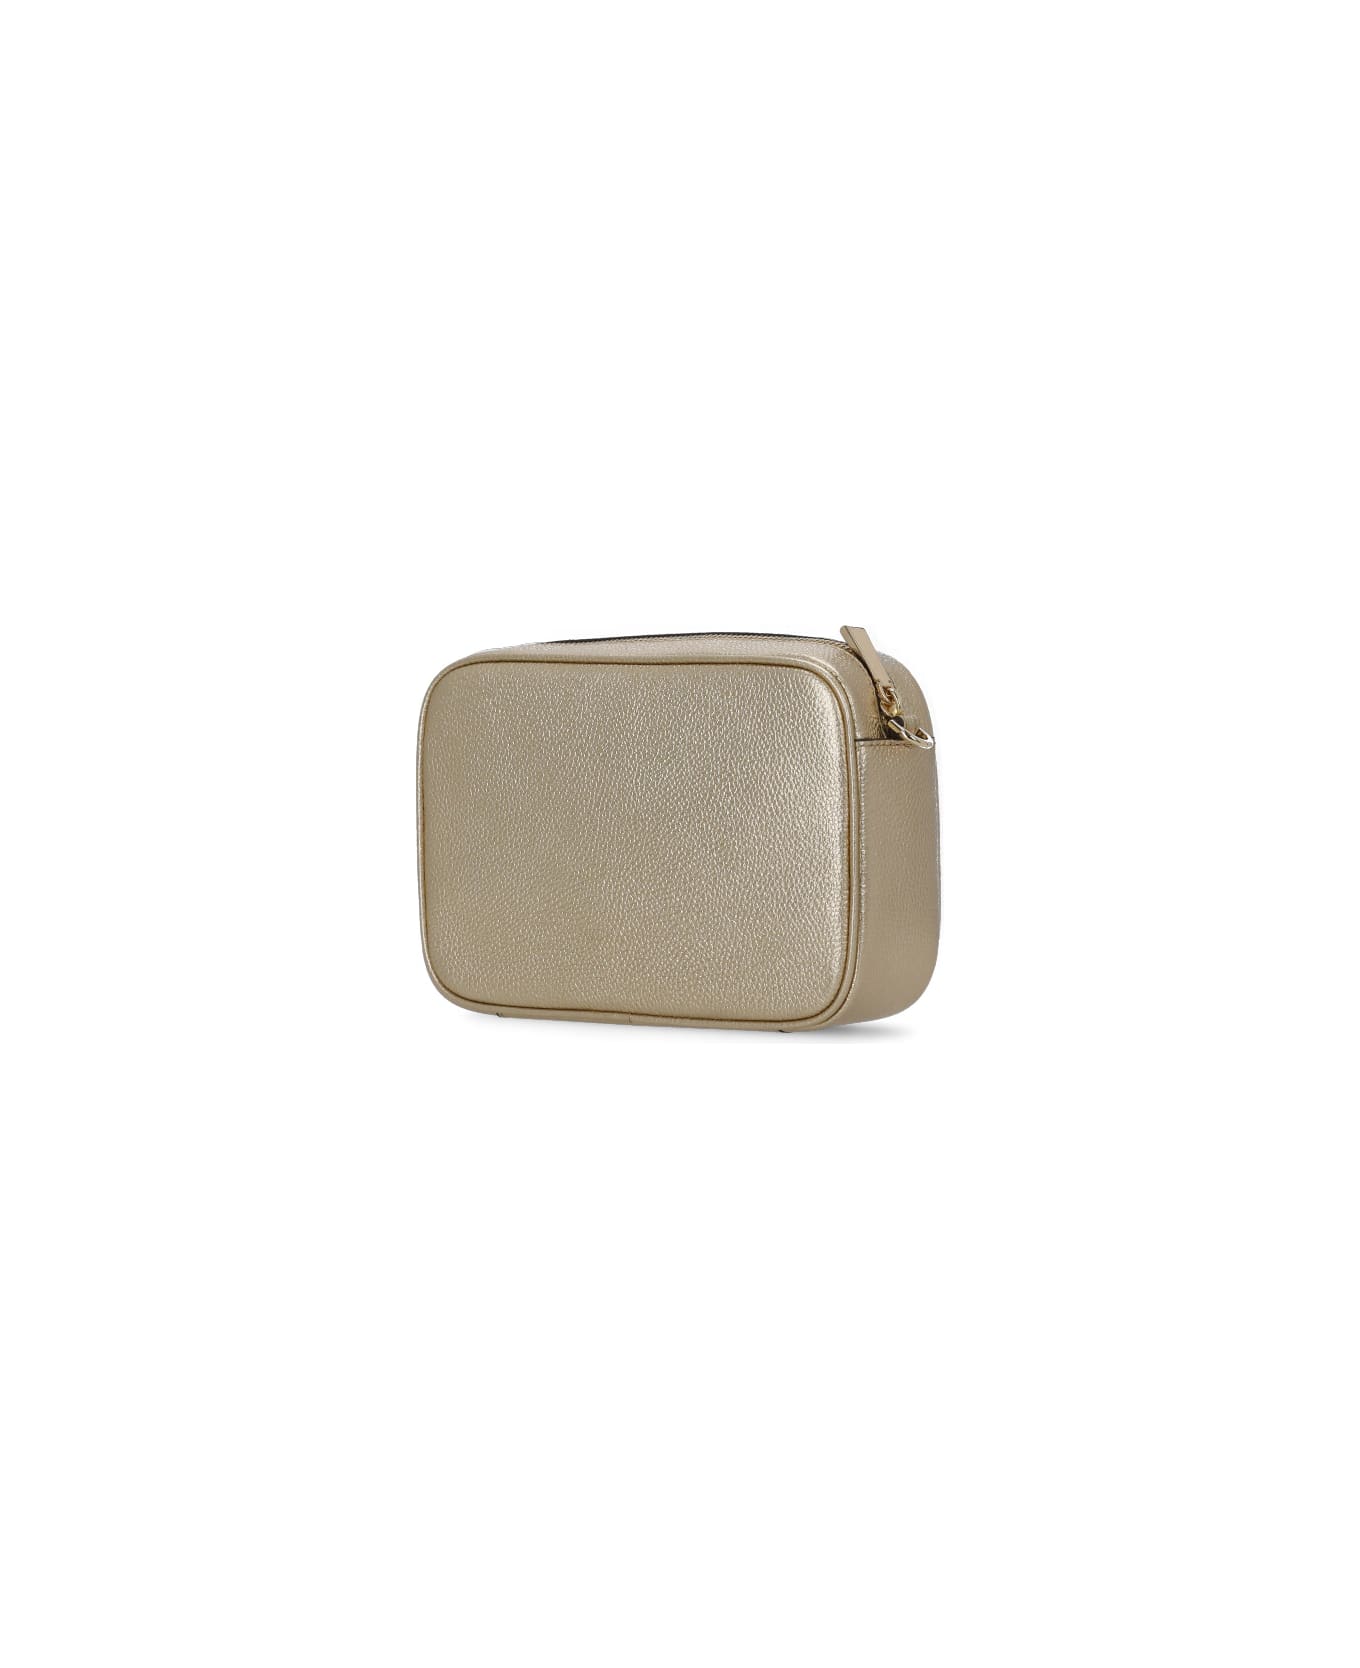 Michael Kors Leather Shoulder Bag - Gold ショルダーバッグ